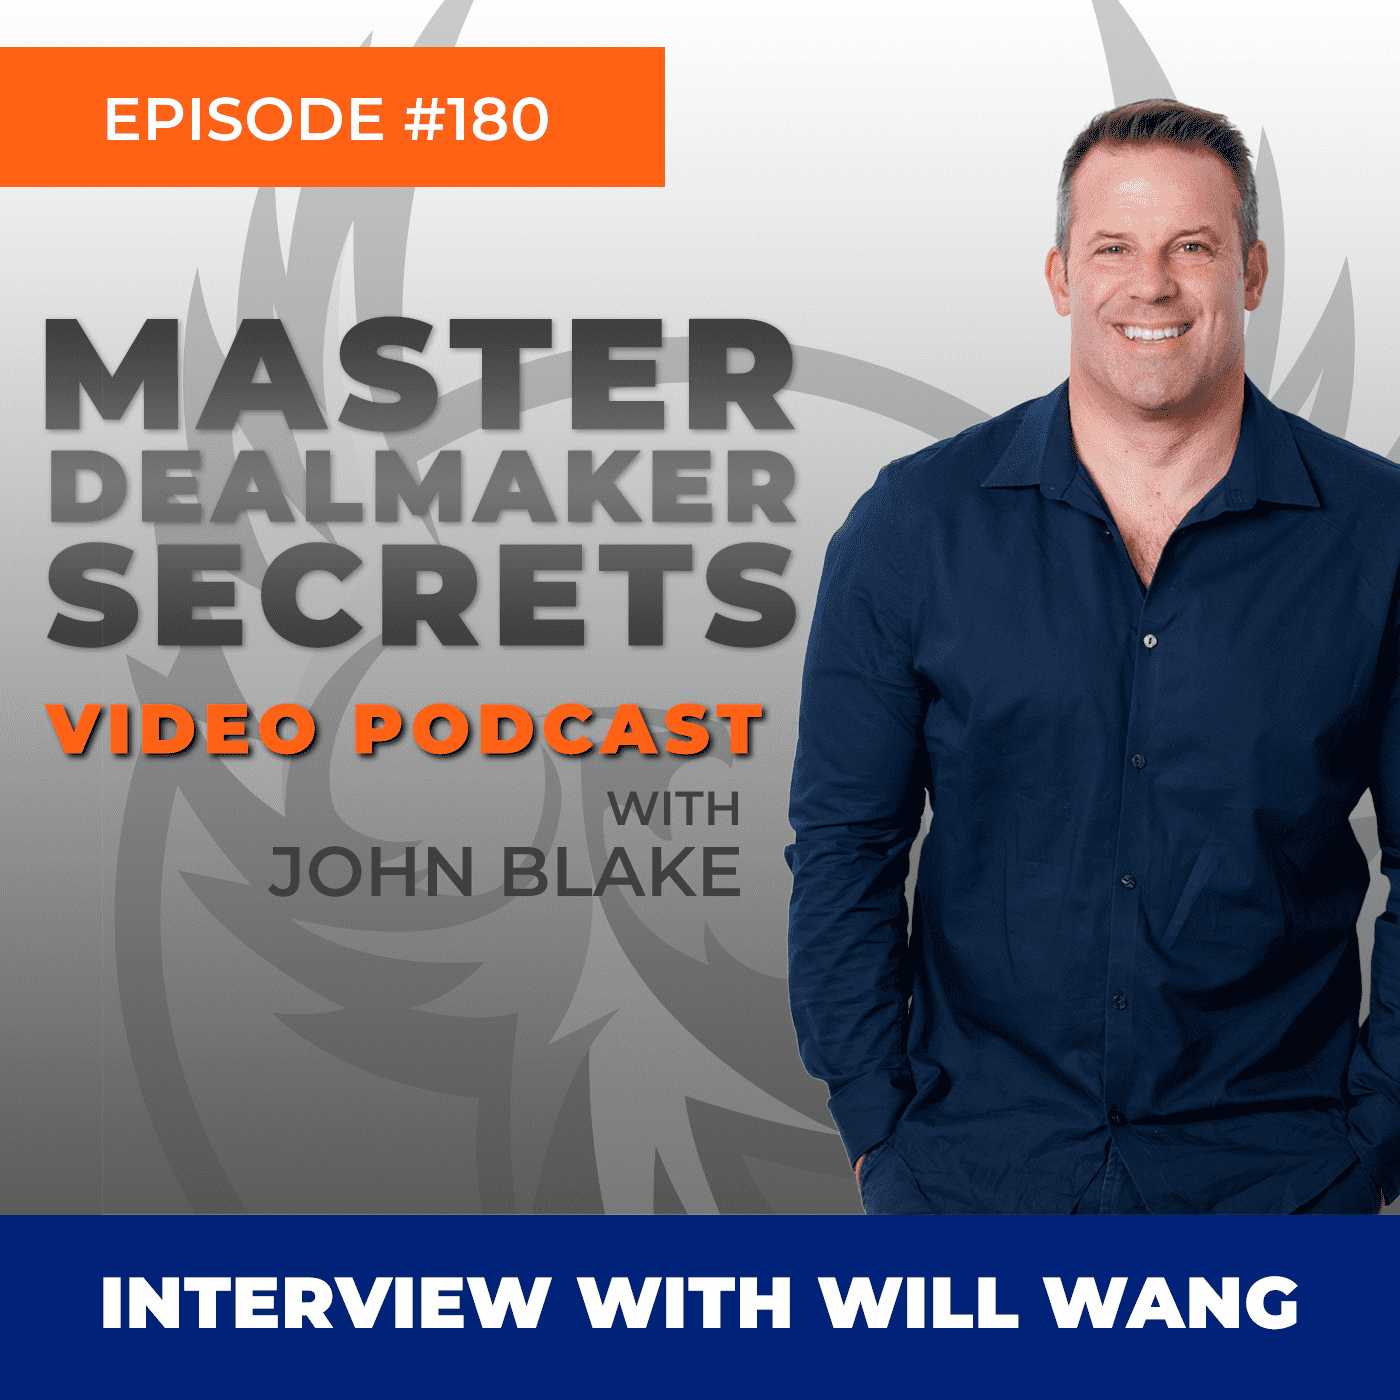 John Blake Interview with Will Wang